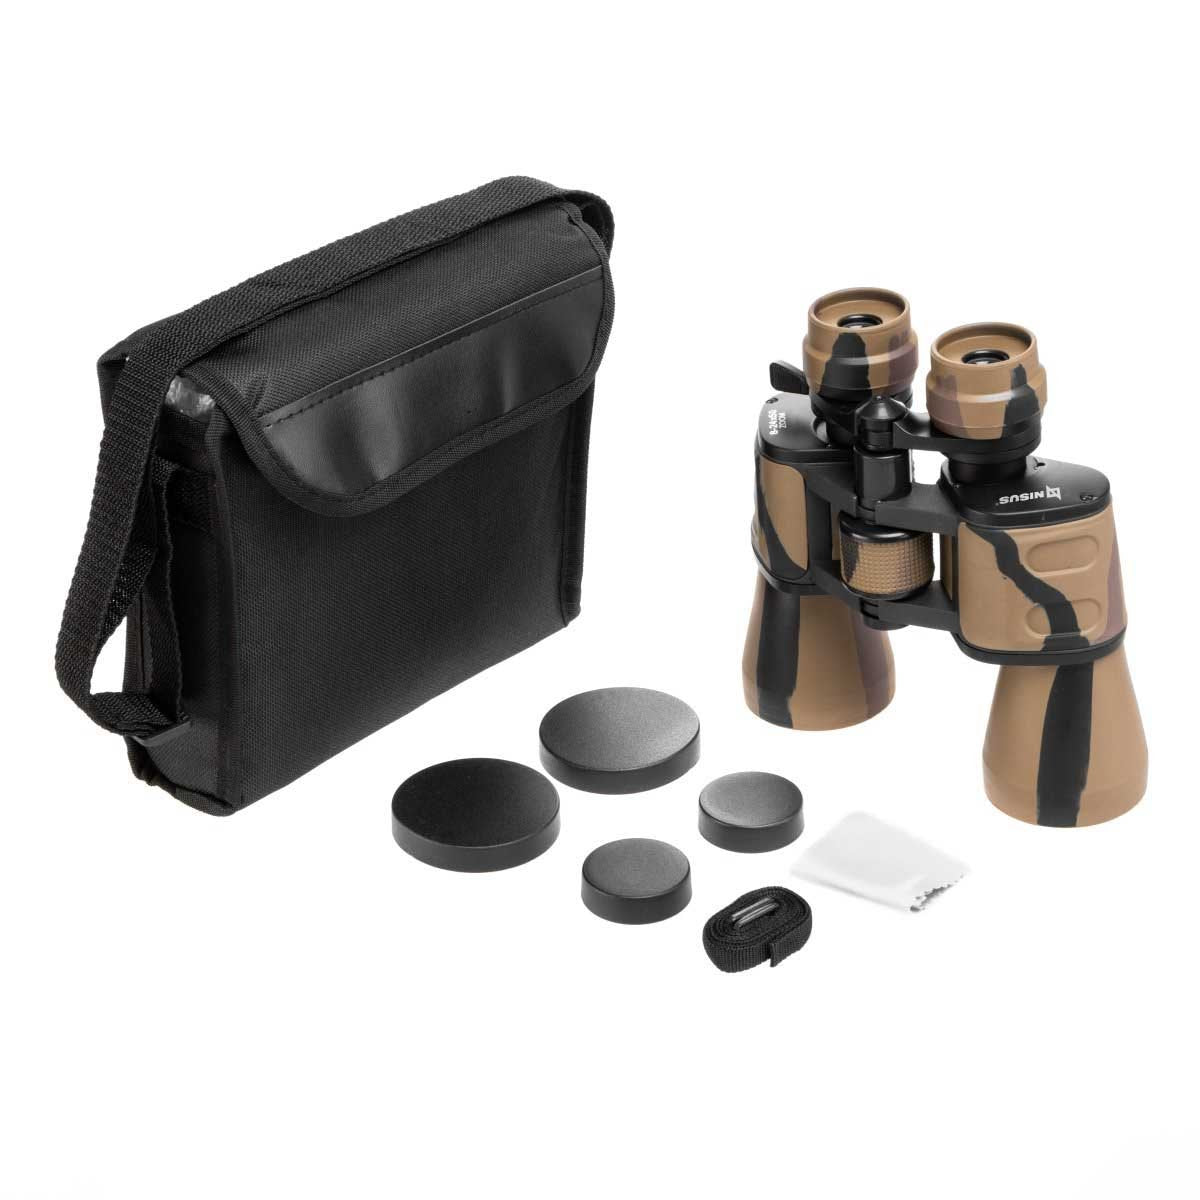 8-24x50 Hunter's Binocular with Travel Case